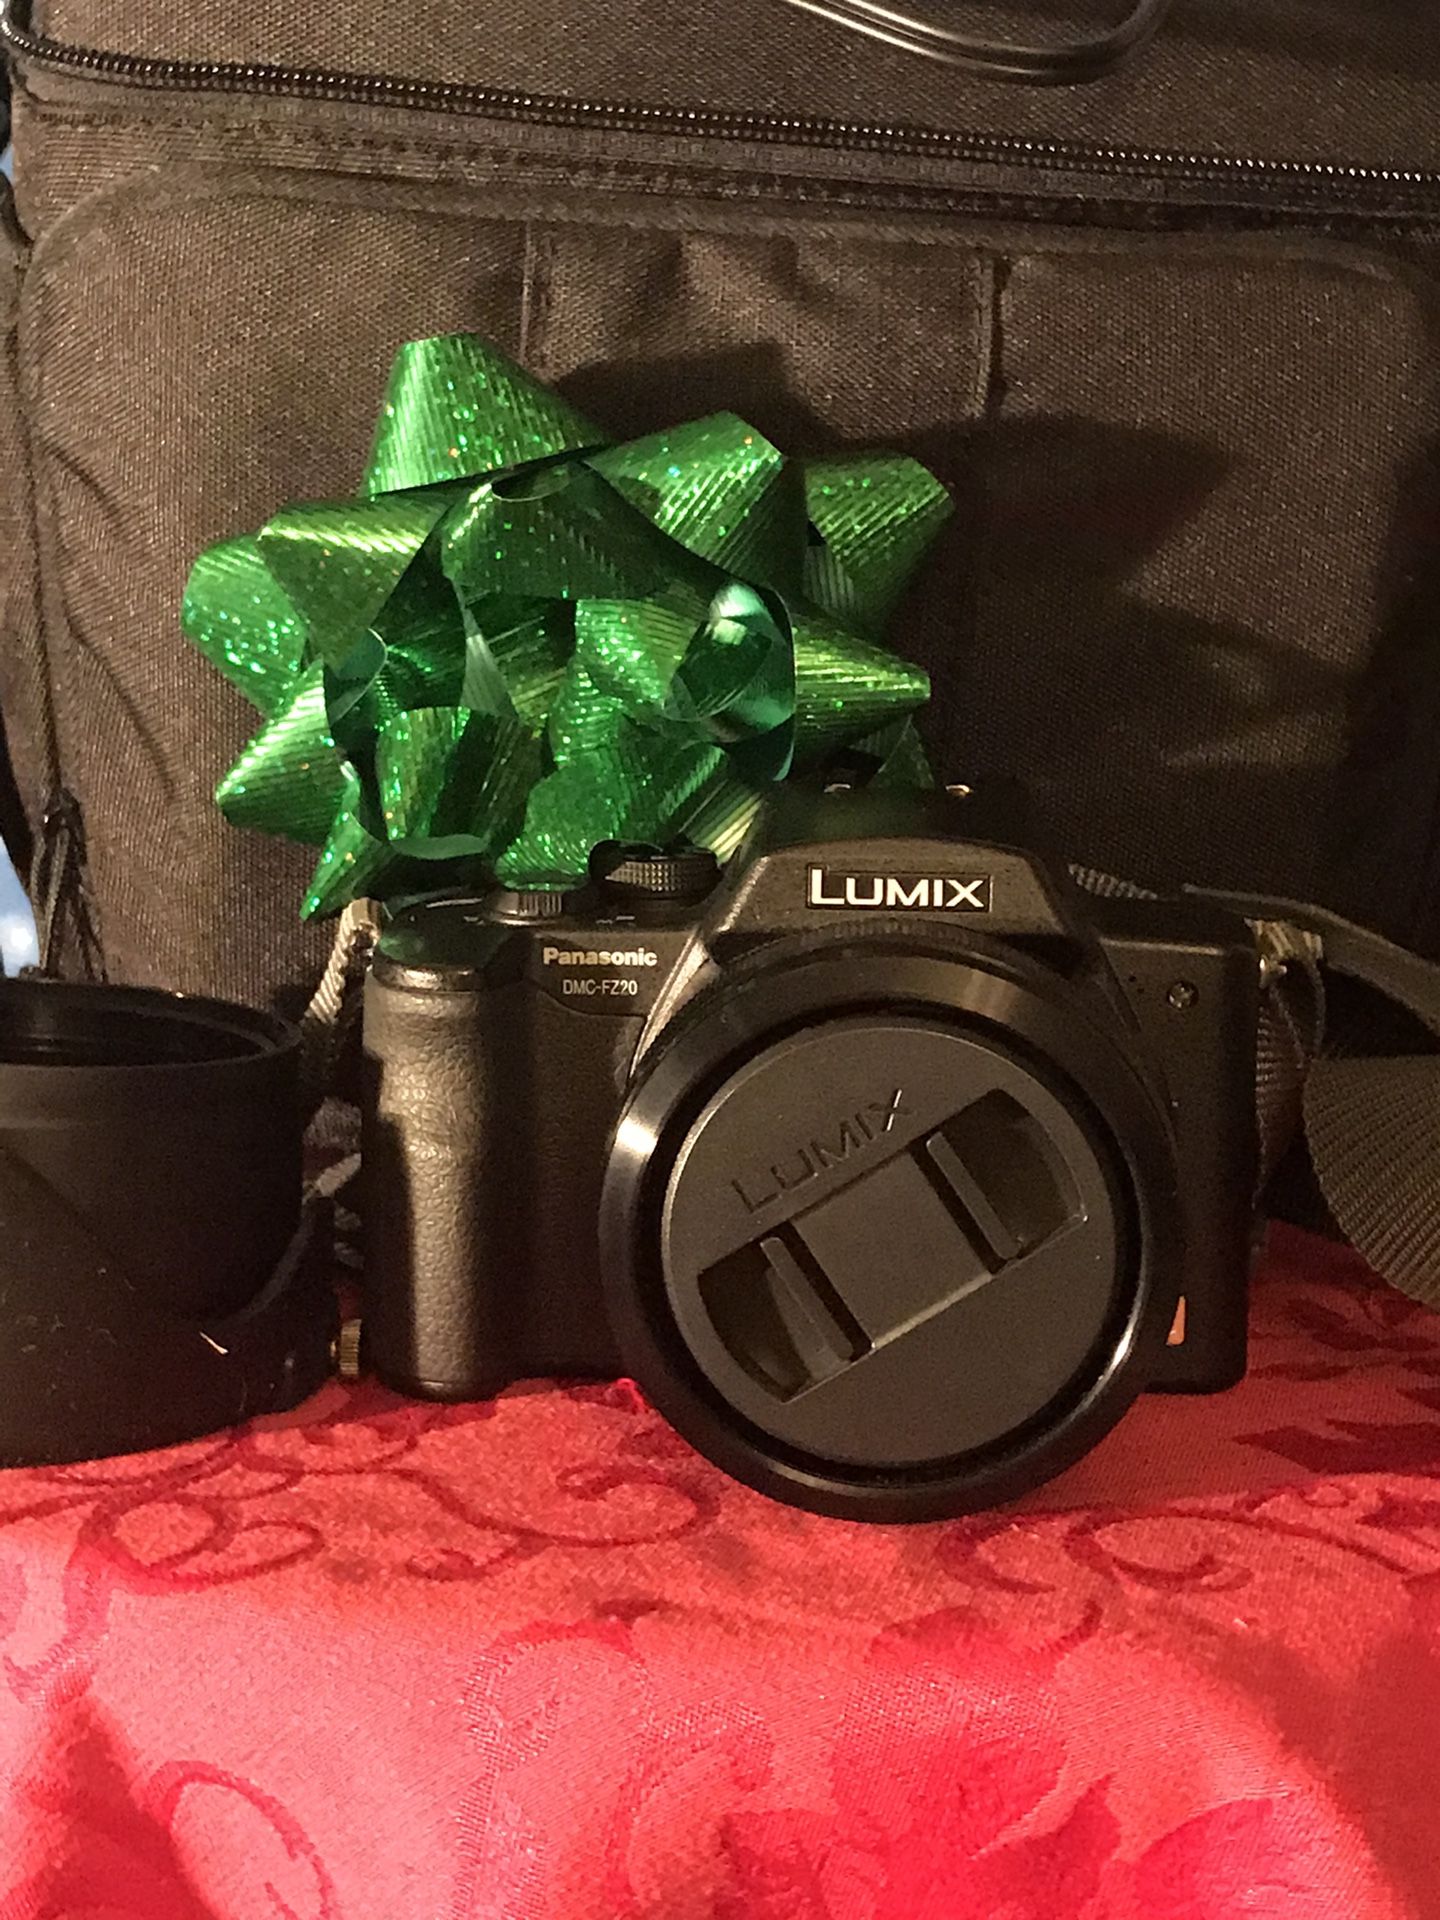 LUMIX Pro Digital Camera And Case